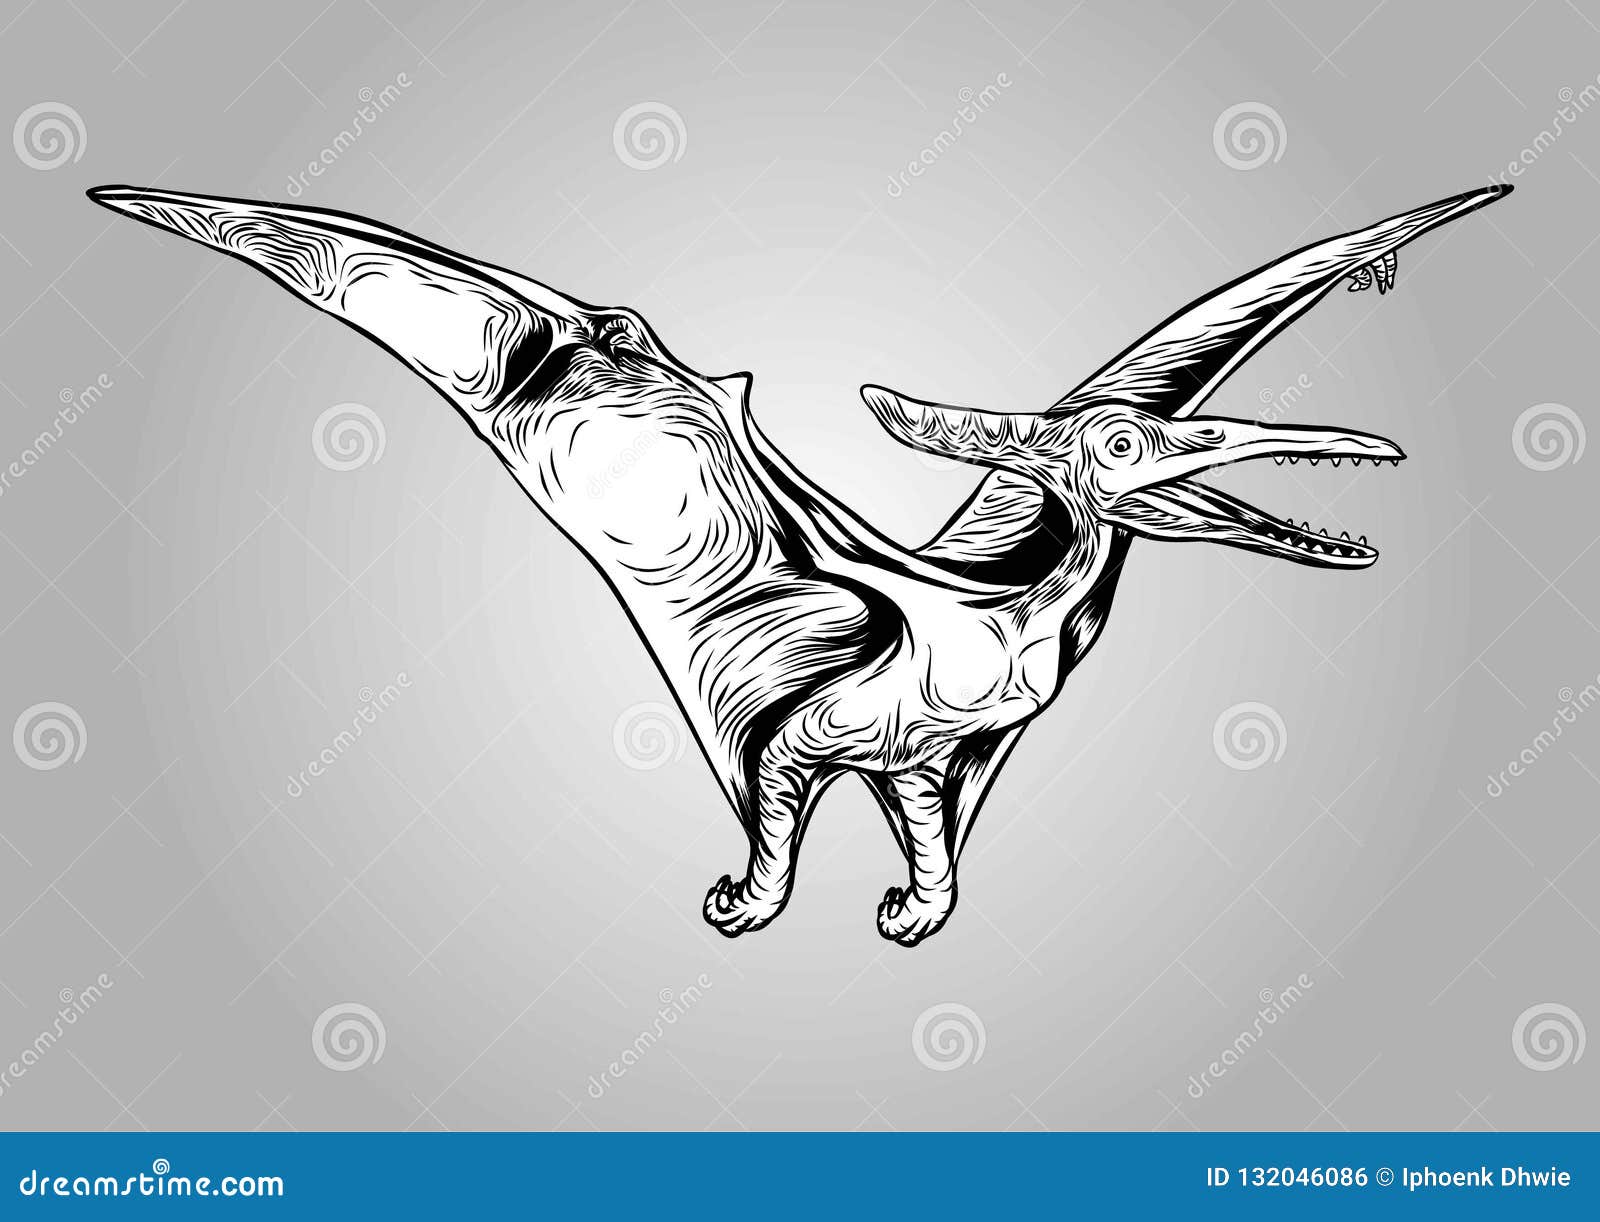 Pterodactyl Stock Illustrations – 5,741 Pterodactyl Stock Illustrations,  Vectors & Clipart - Dreamstime